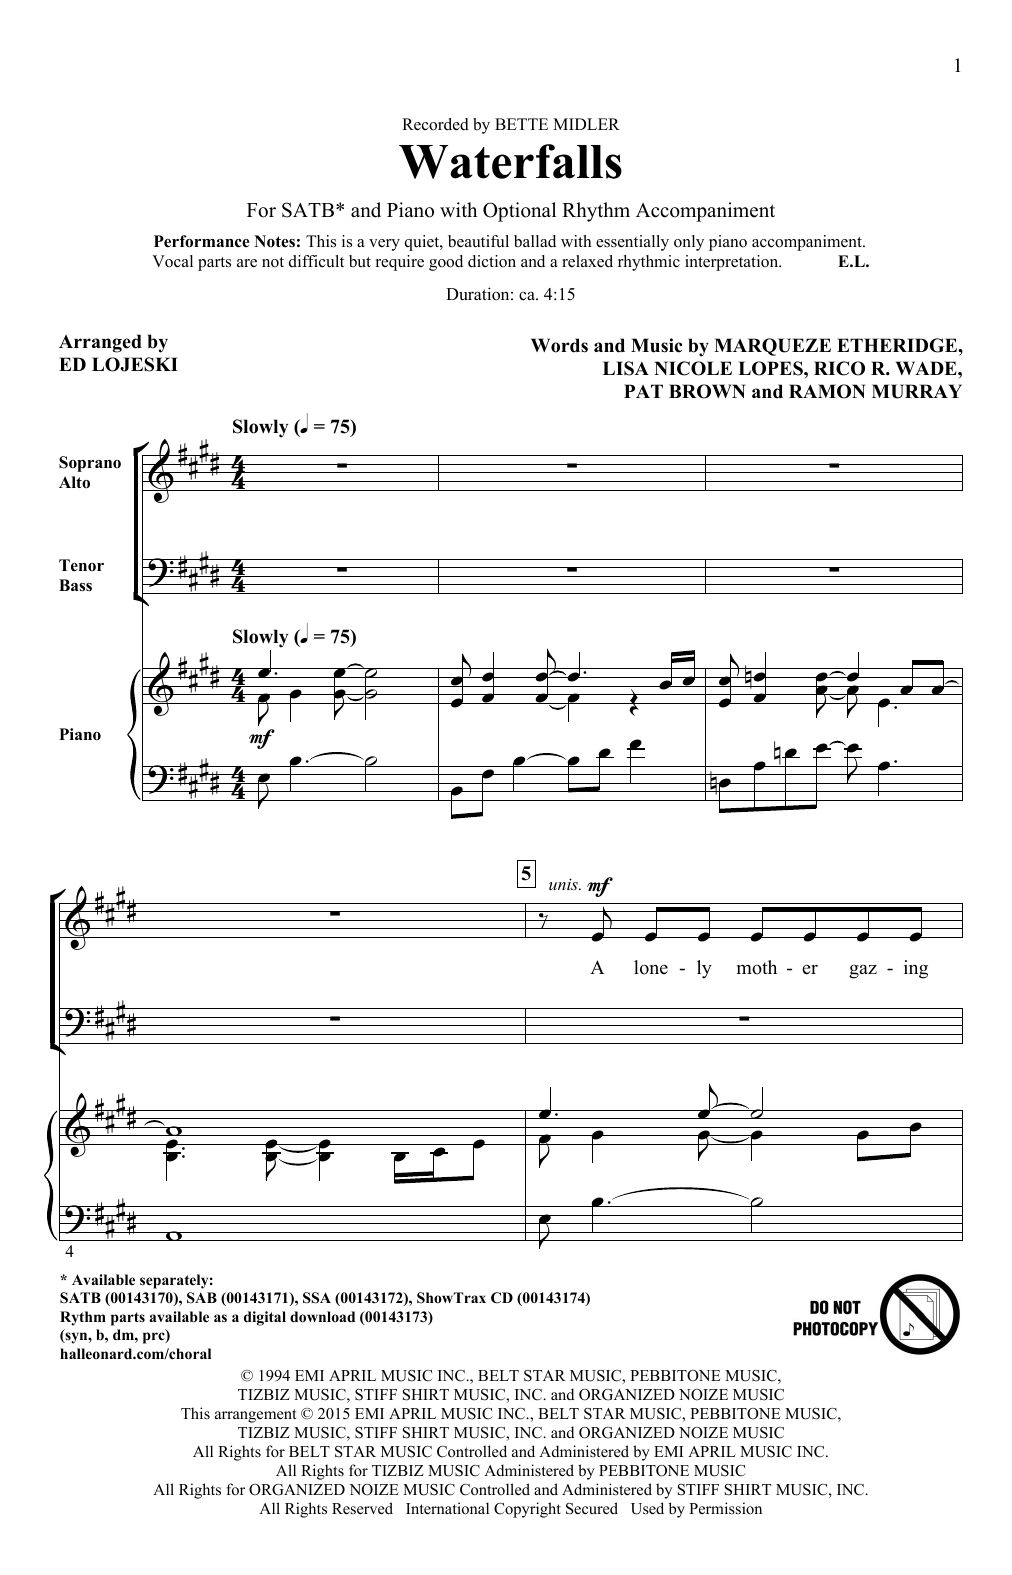 Ed Lojeski Waterfalls sheet music notes and chords arranged for SATB Choir